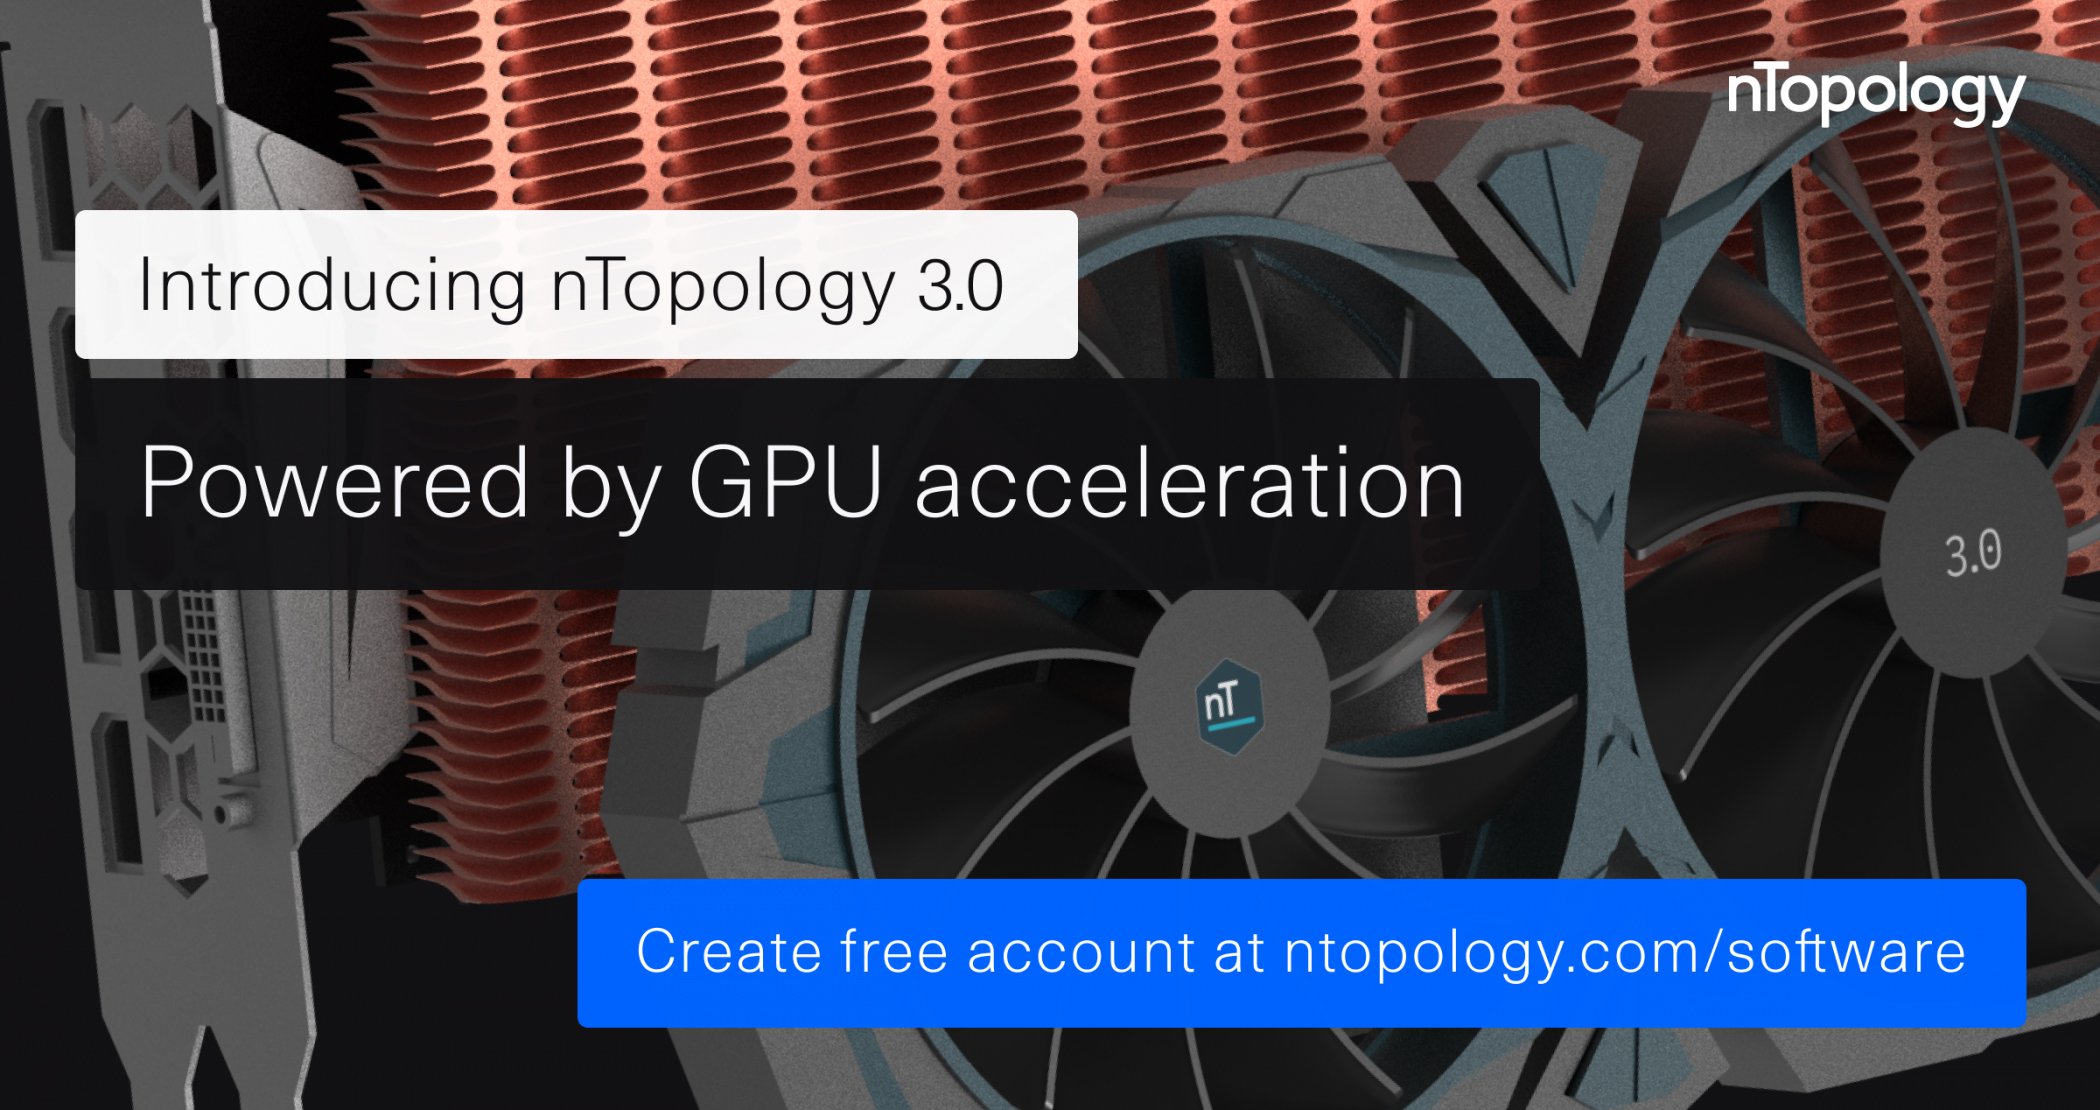 New nTopology 3.0 Introduces Real-time Visualization via GPU